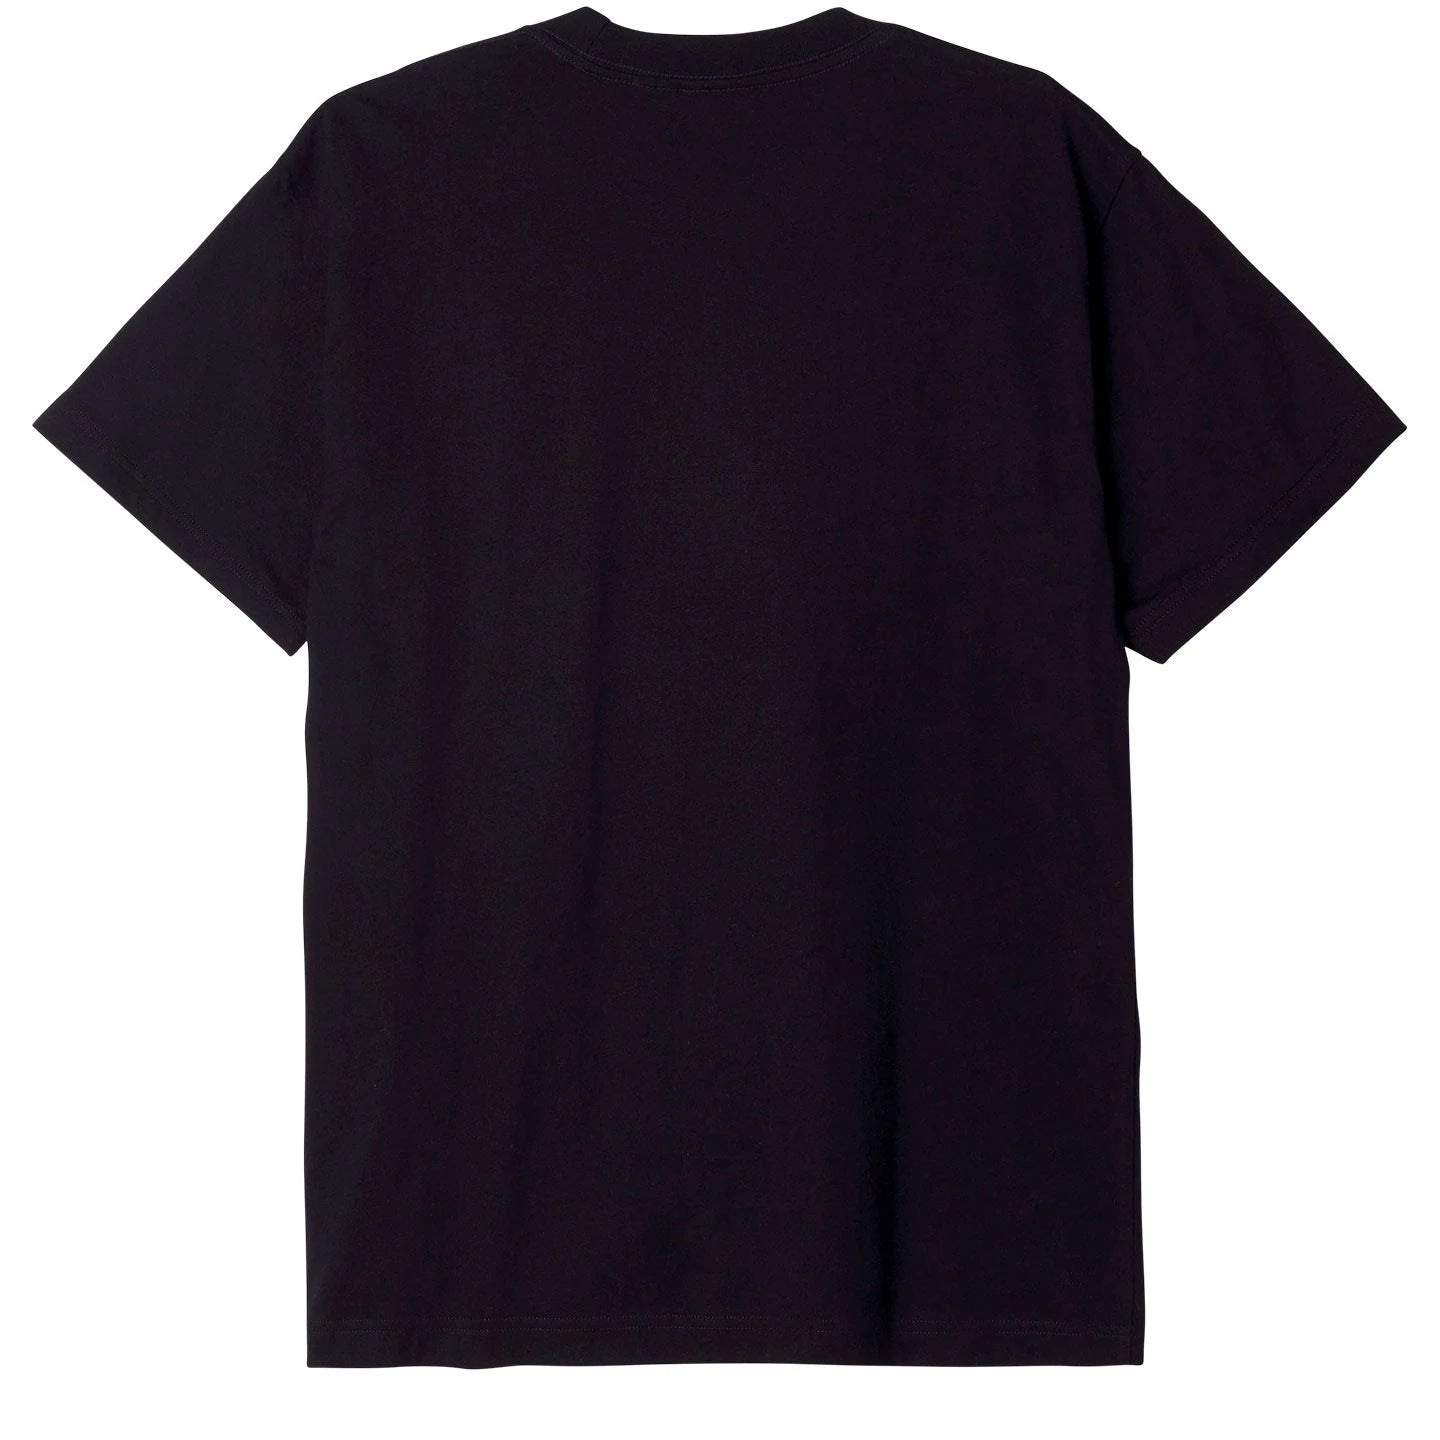 Beam Pocket T-shirt (Black)